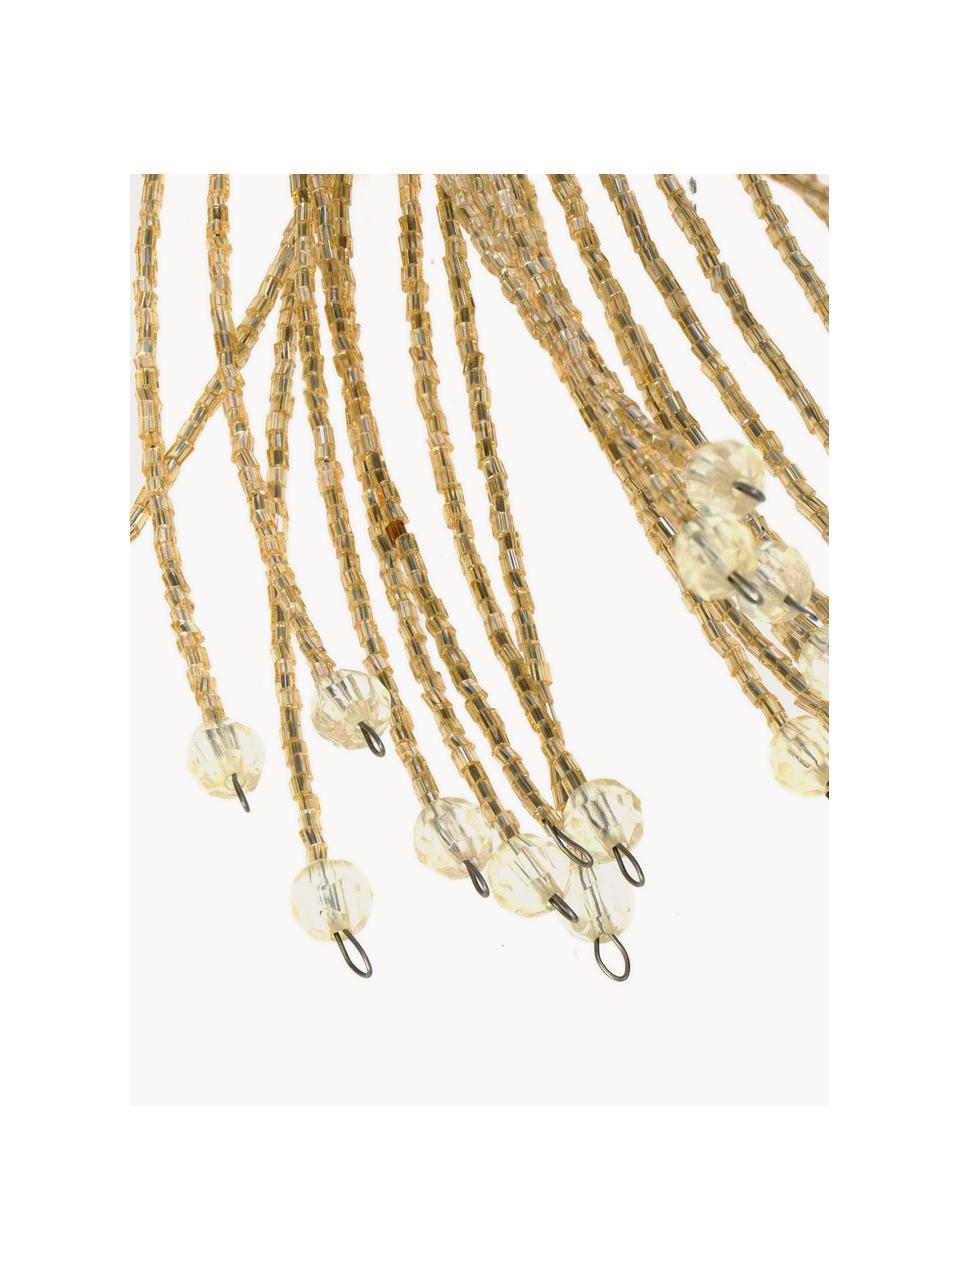 Adornos navideños con perlas Beads, 2 uds., Vidrio, metal, recubierto, Champán, Ø 40 x Al 58 cm